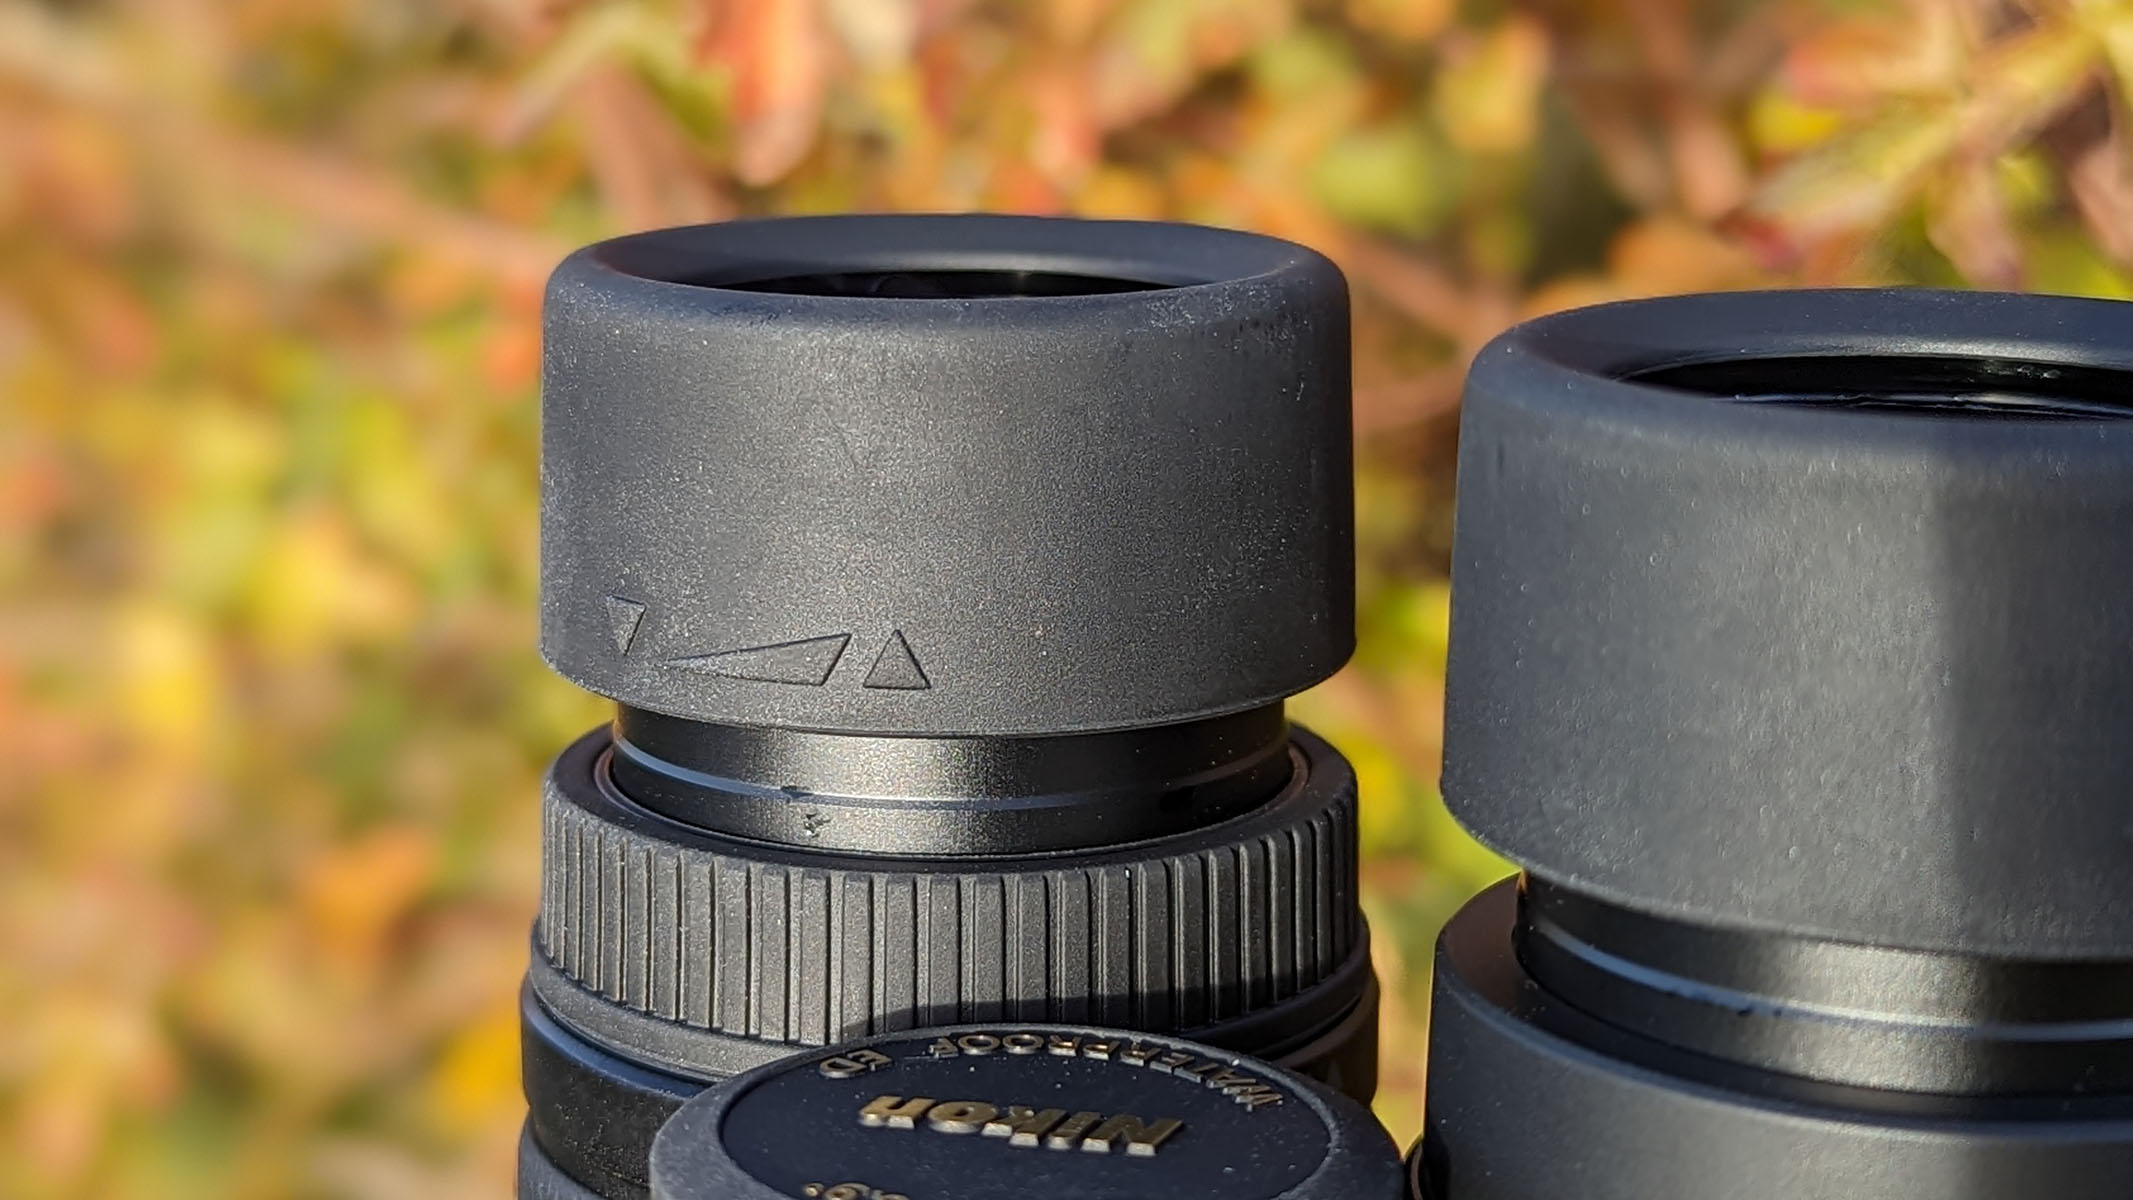 Close-up of the Nikon Monarch HG 10x42's swivel eyecups